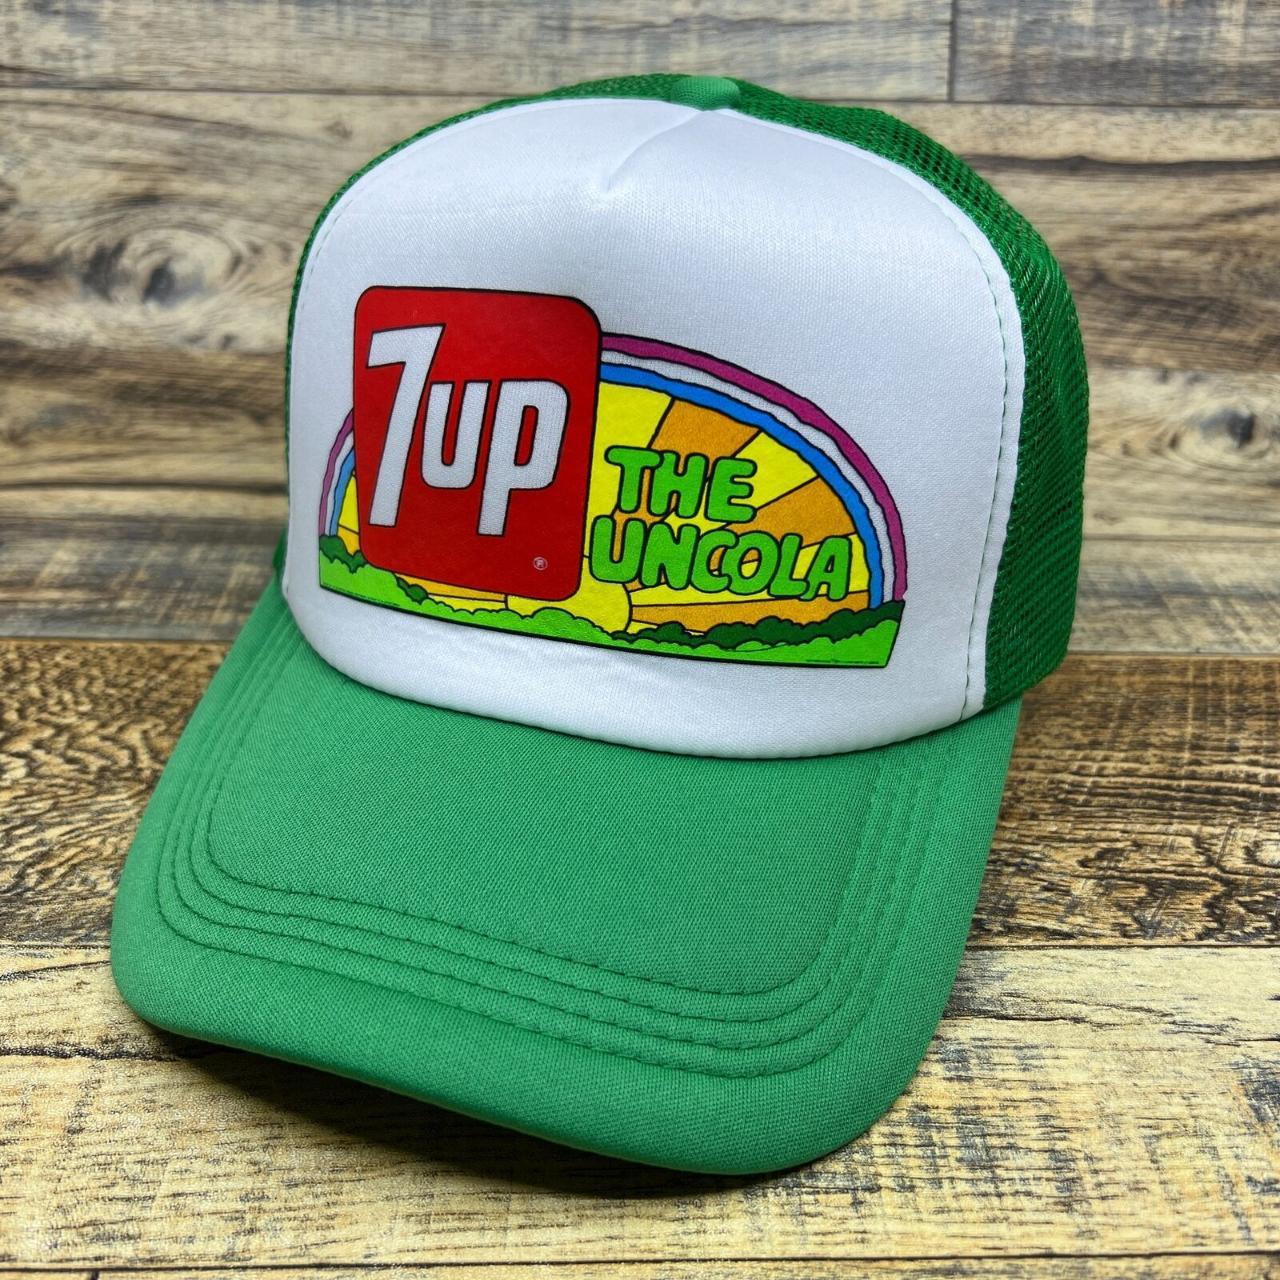 7UP Mens Trucker Hat Green Snapback 1970s Vintage - Depop